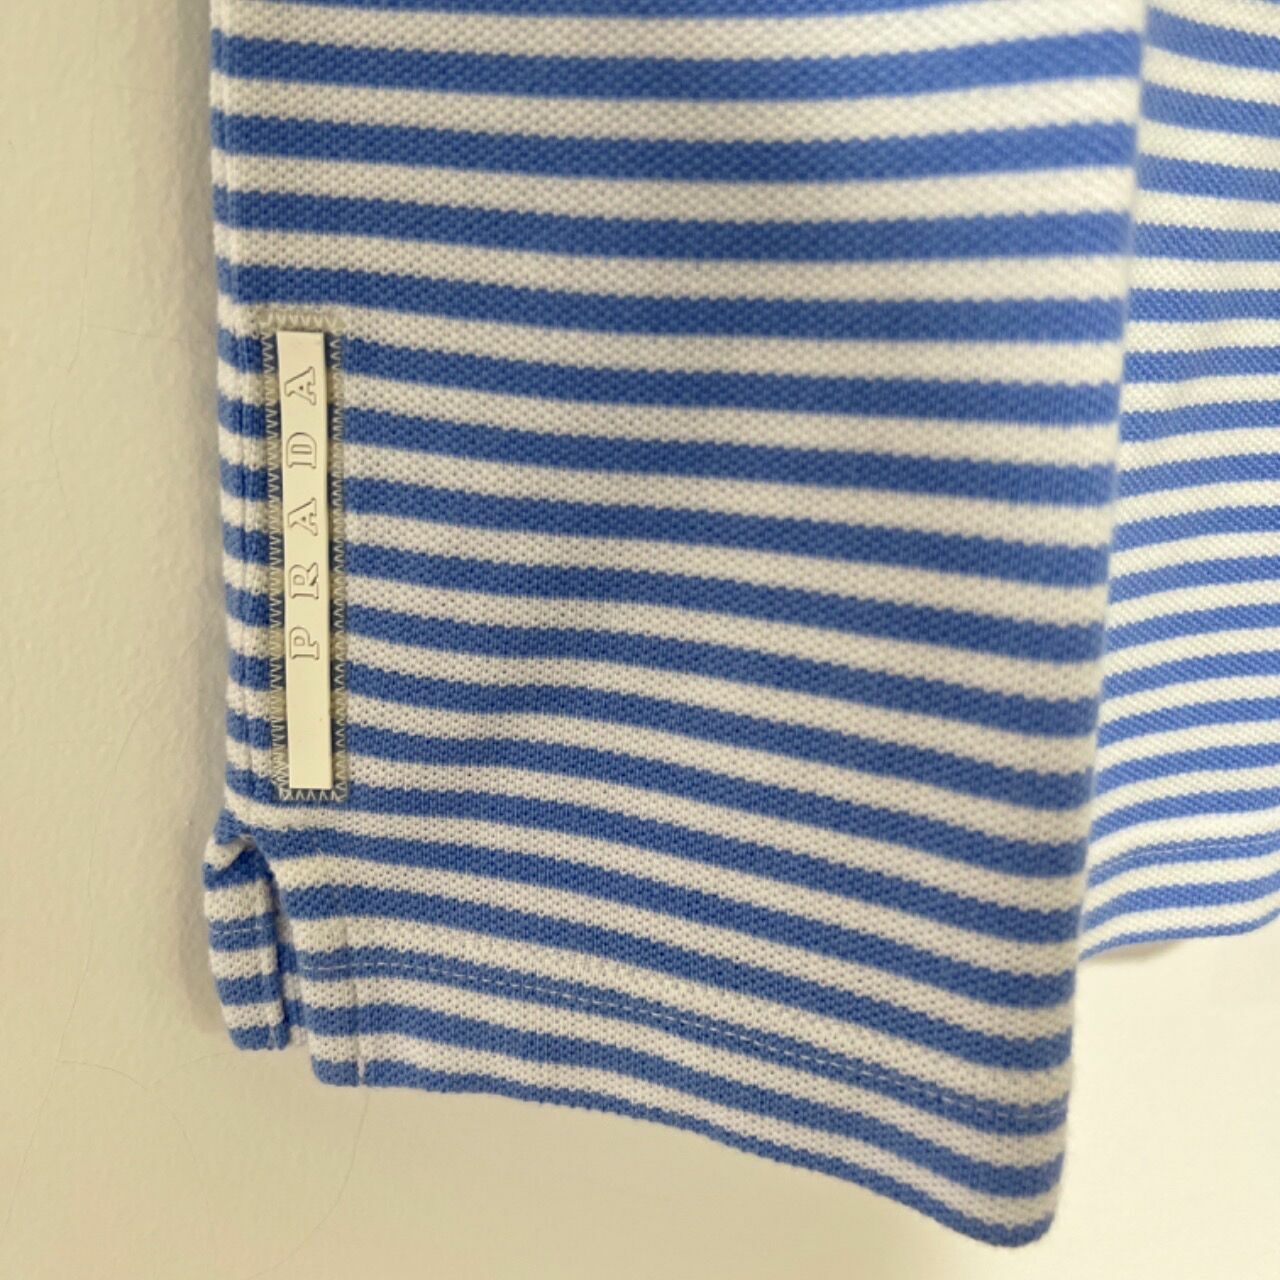 Prada Blue & White Stripes Polo Shirt